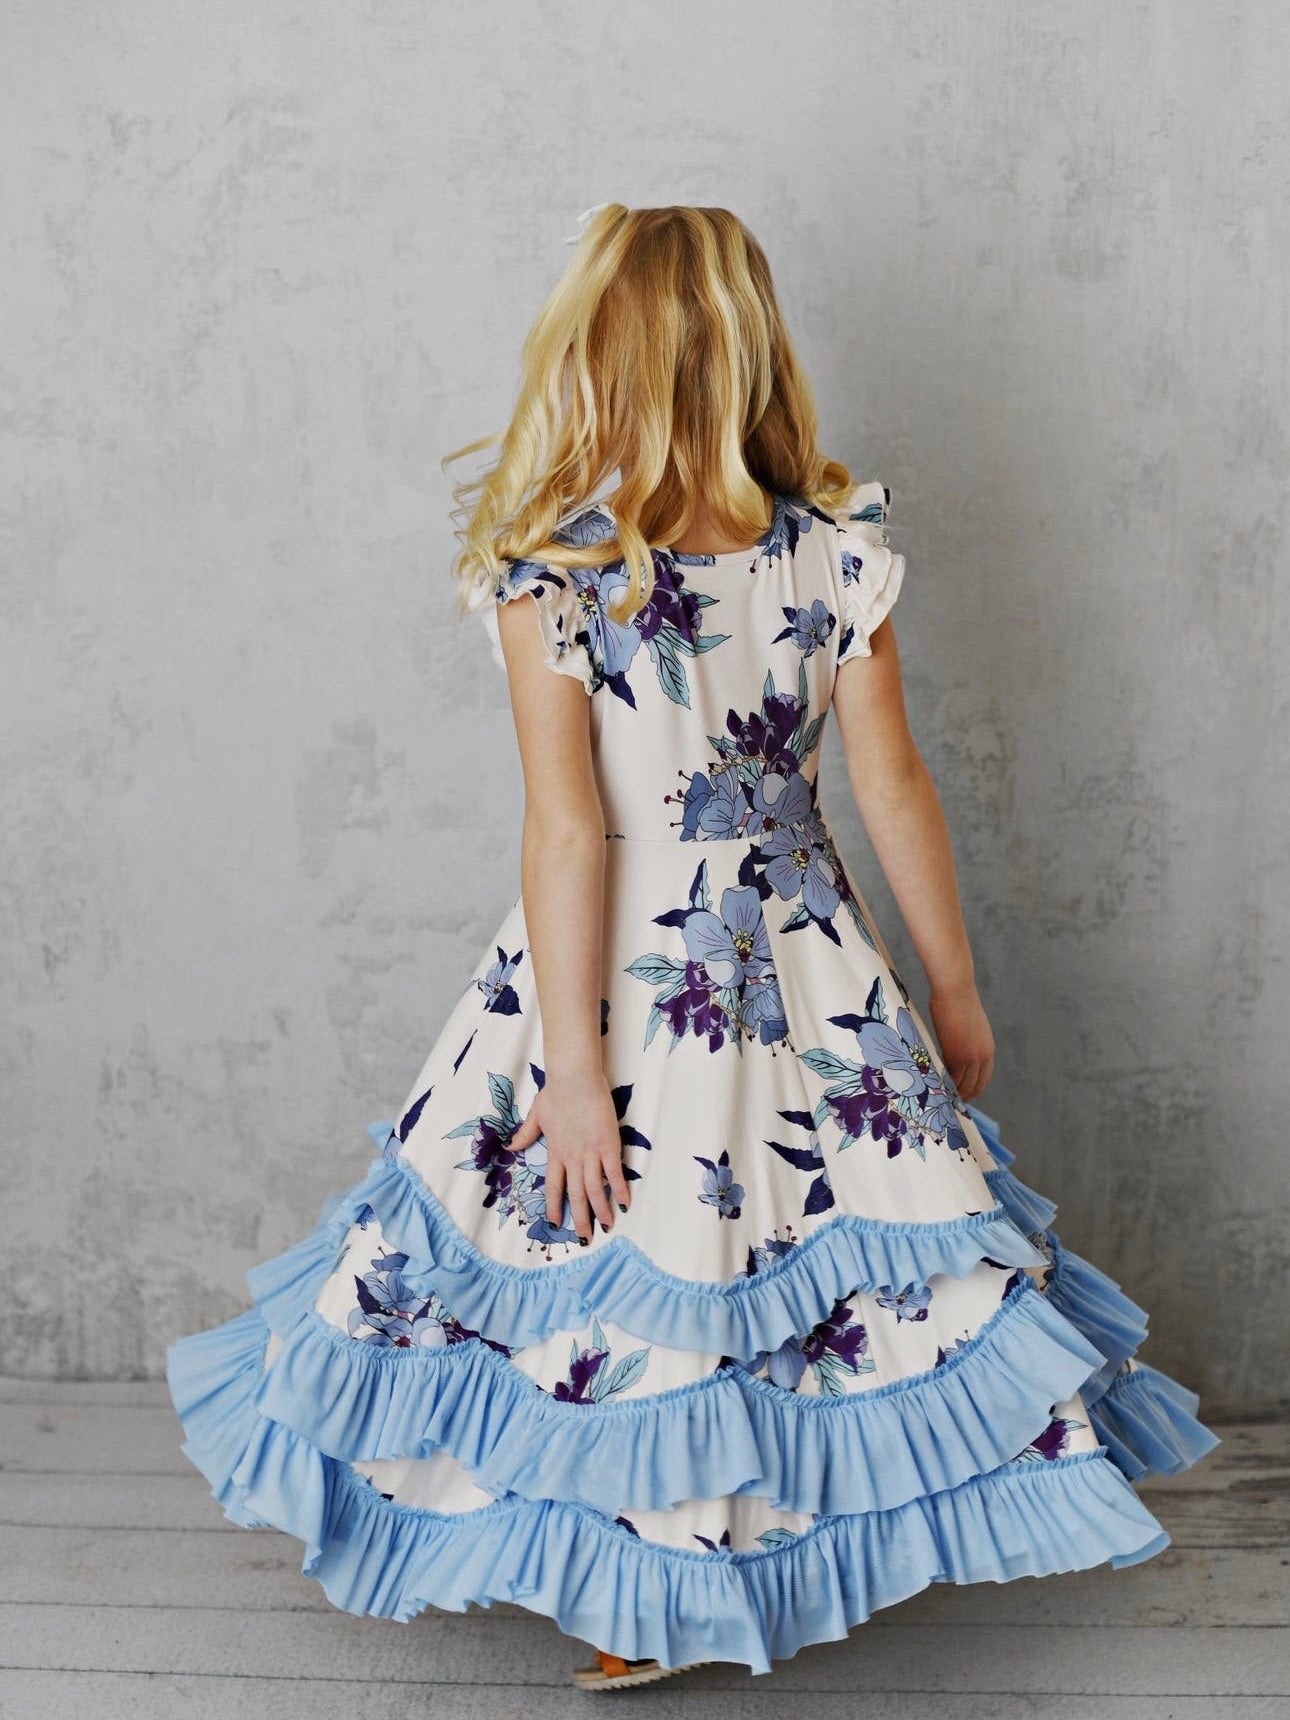 The Dahlia Blue Floral Dress